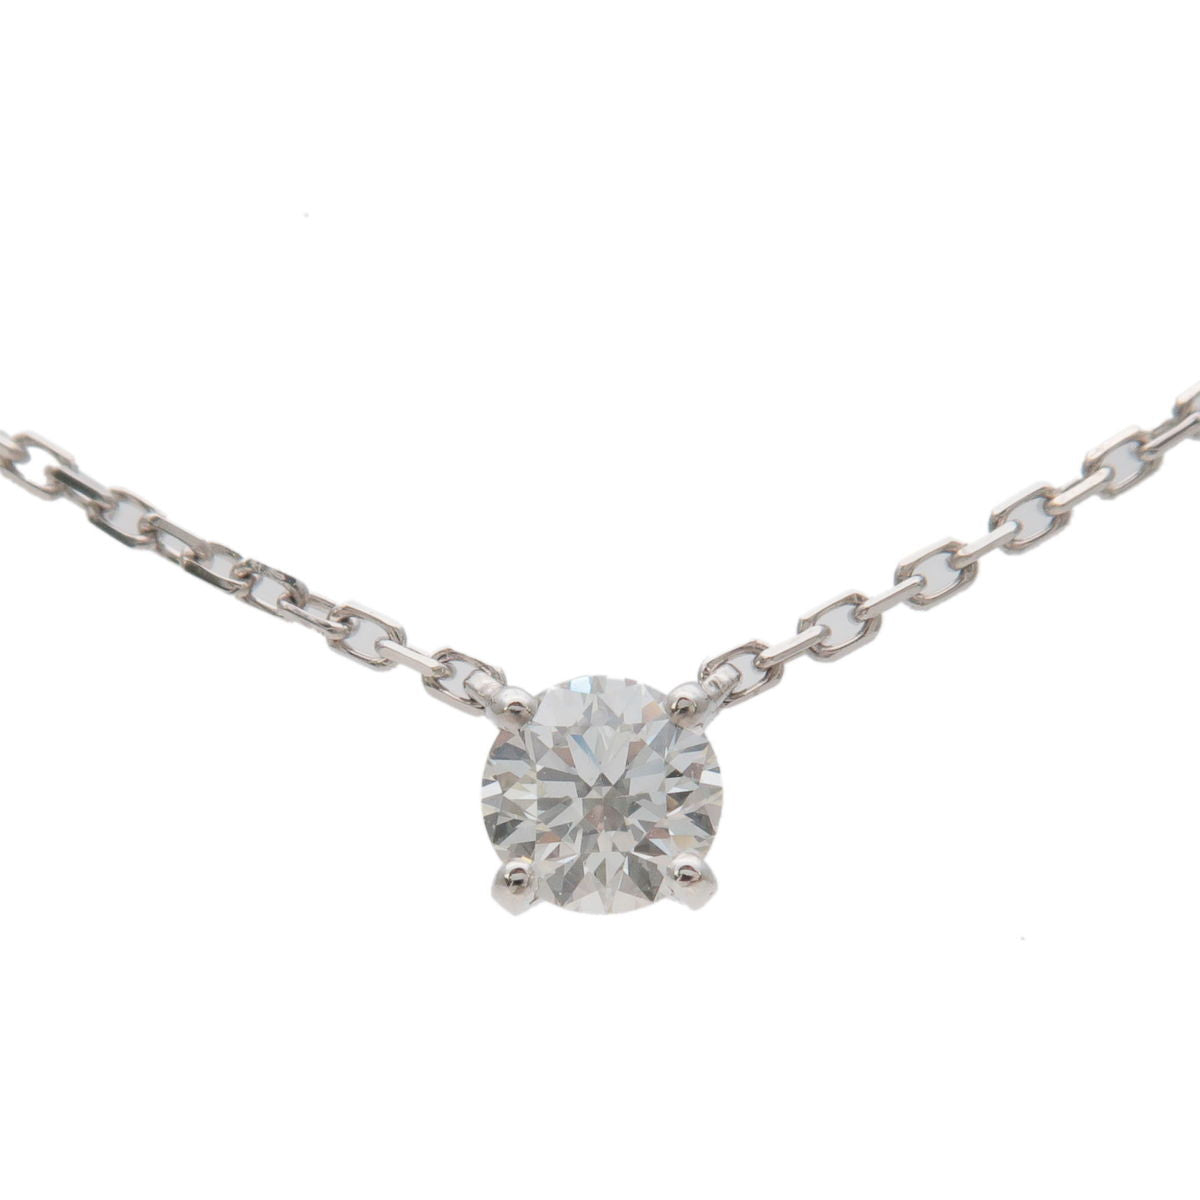 Cartier-Solitaire-1895-Diamond-Necklace-0.23ct-K18-750-White-Gold